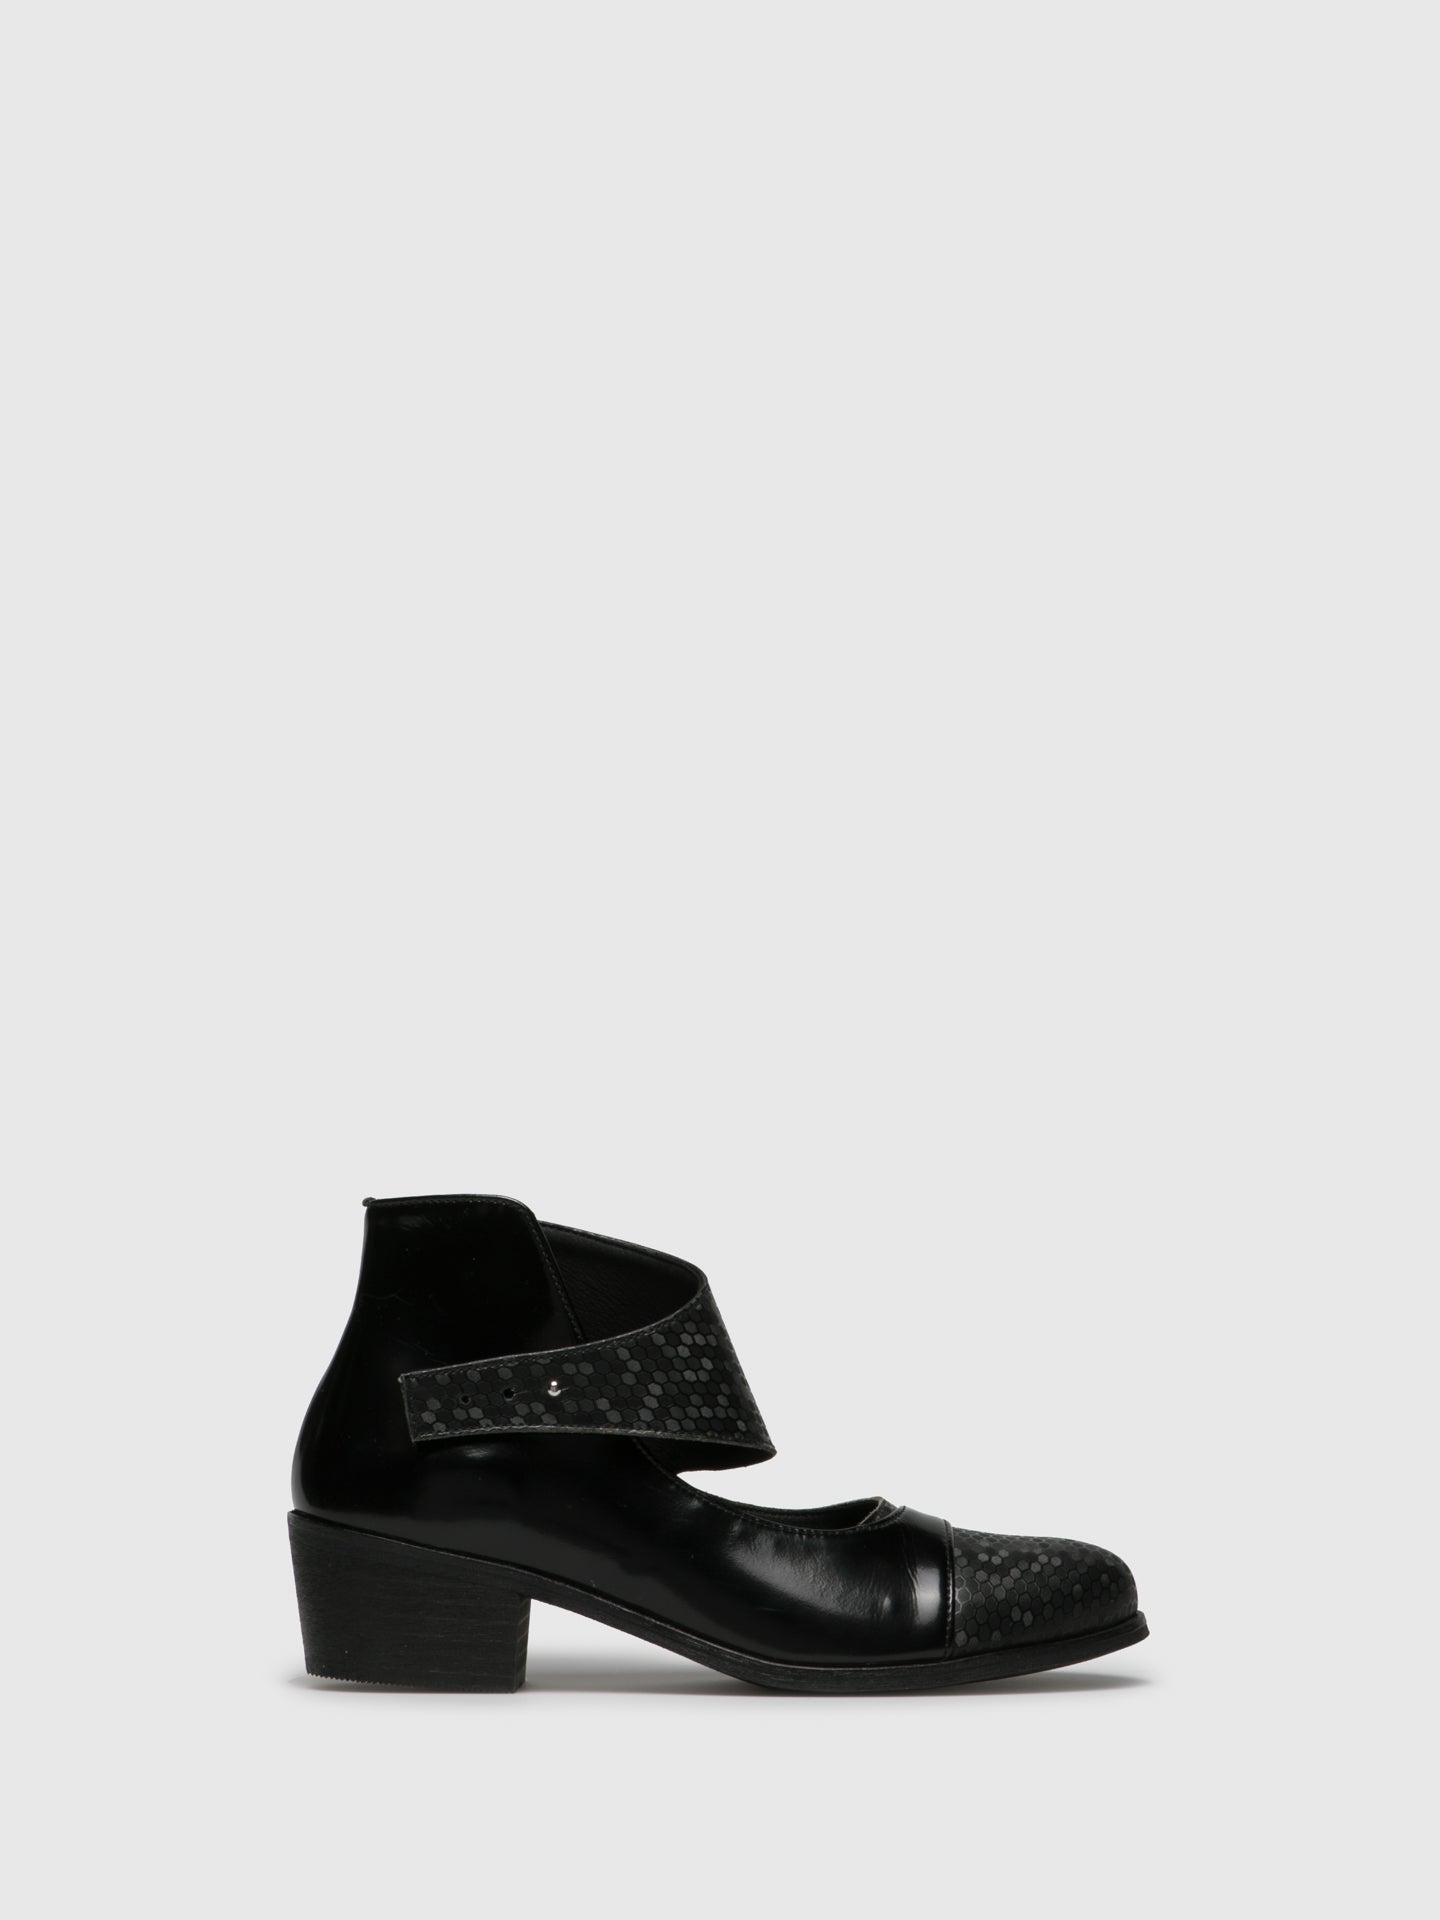 Marita Moreno Gloss Black Round Toe Shoes